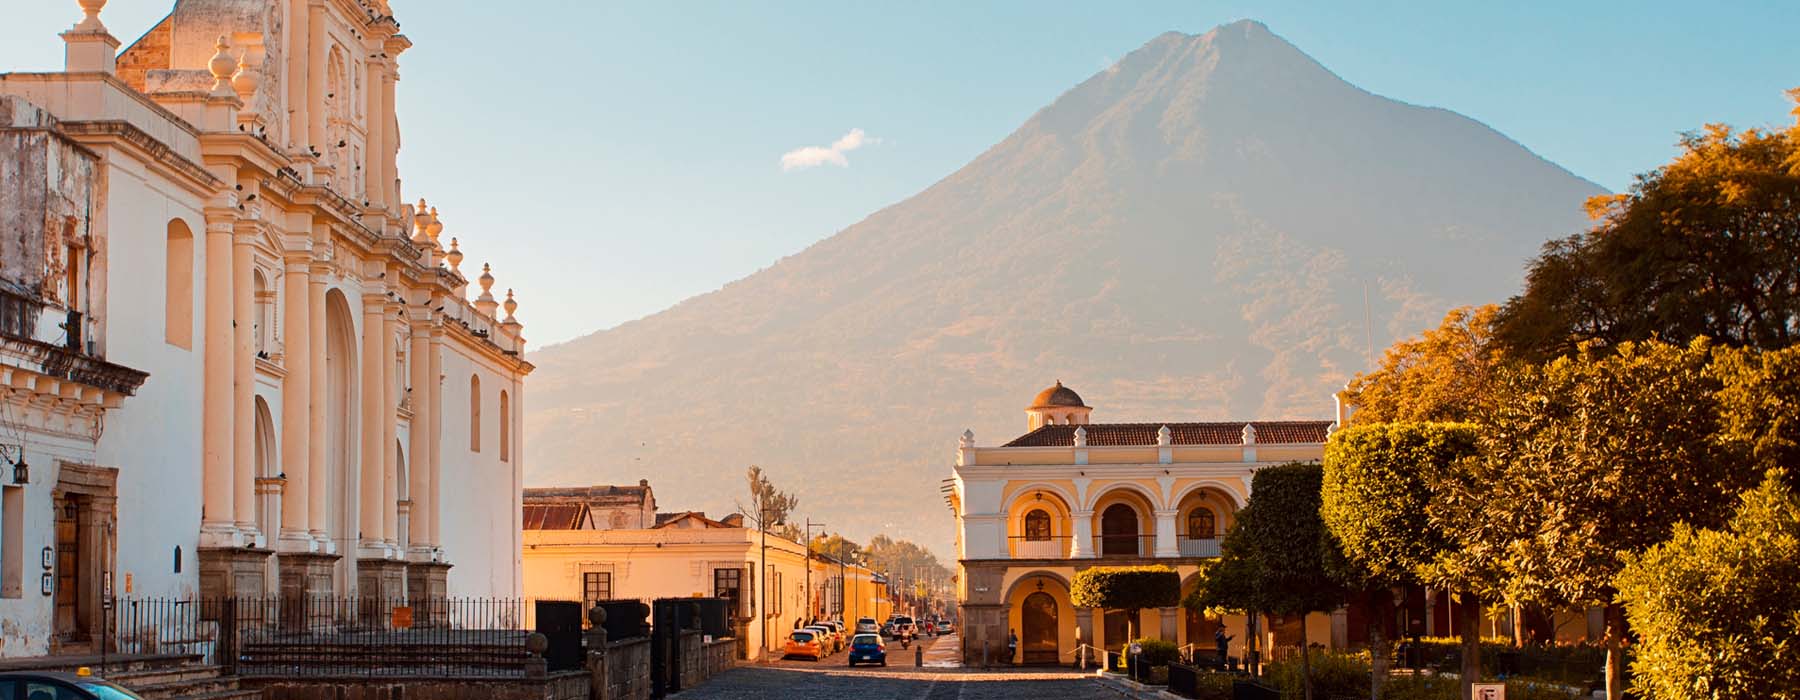 Antigua Guatemala<br class="hidden-md hidden-lg" /> Holidays